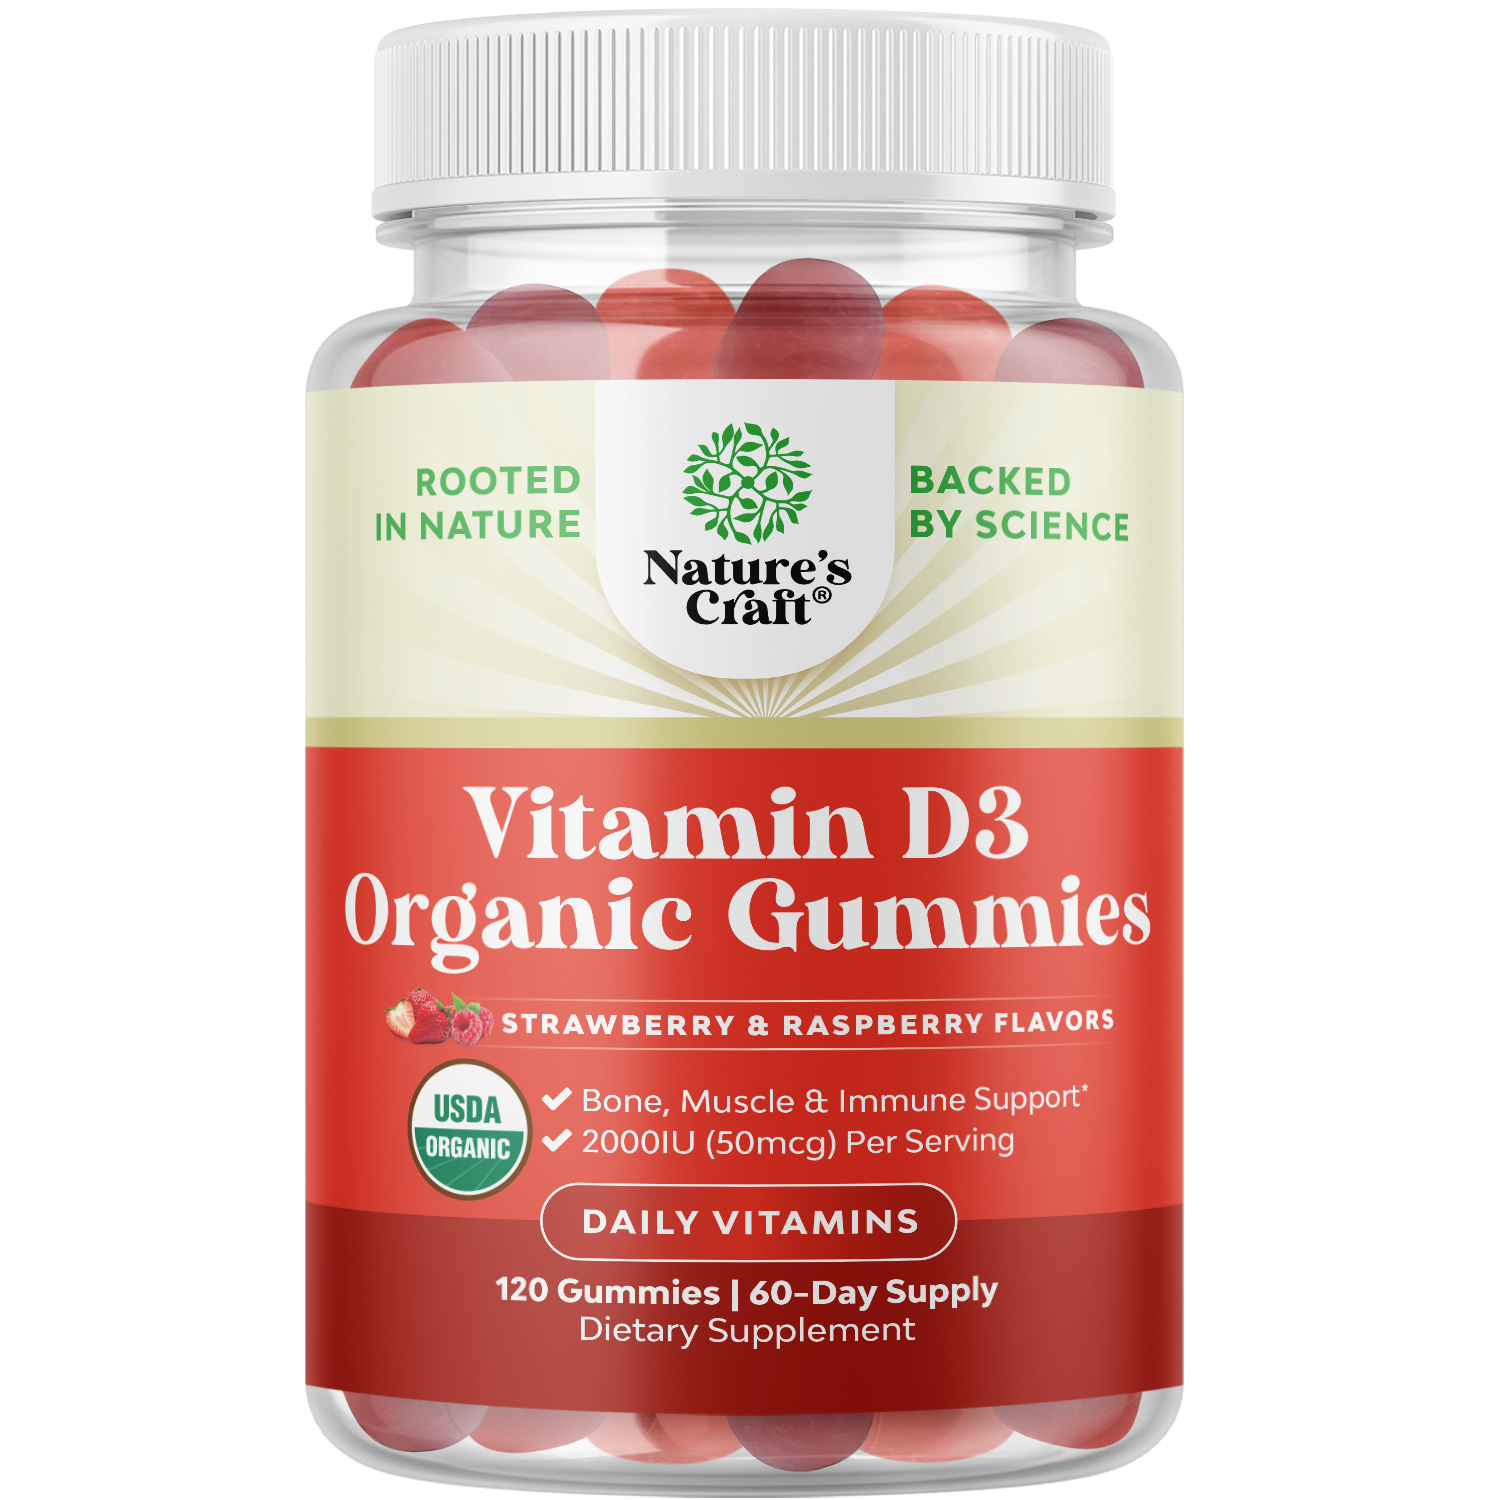 Vitamin D3 Organic Gummies 2000IU per serving - 120 Gummies